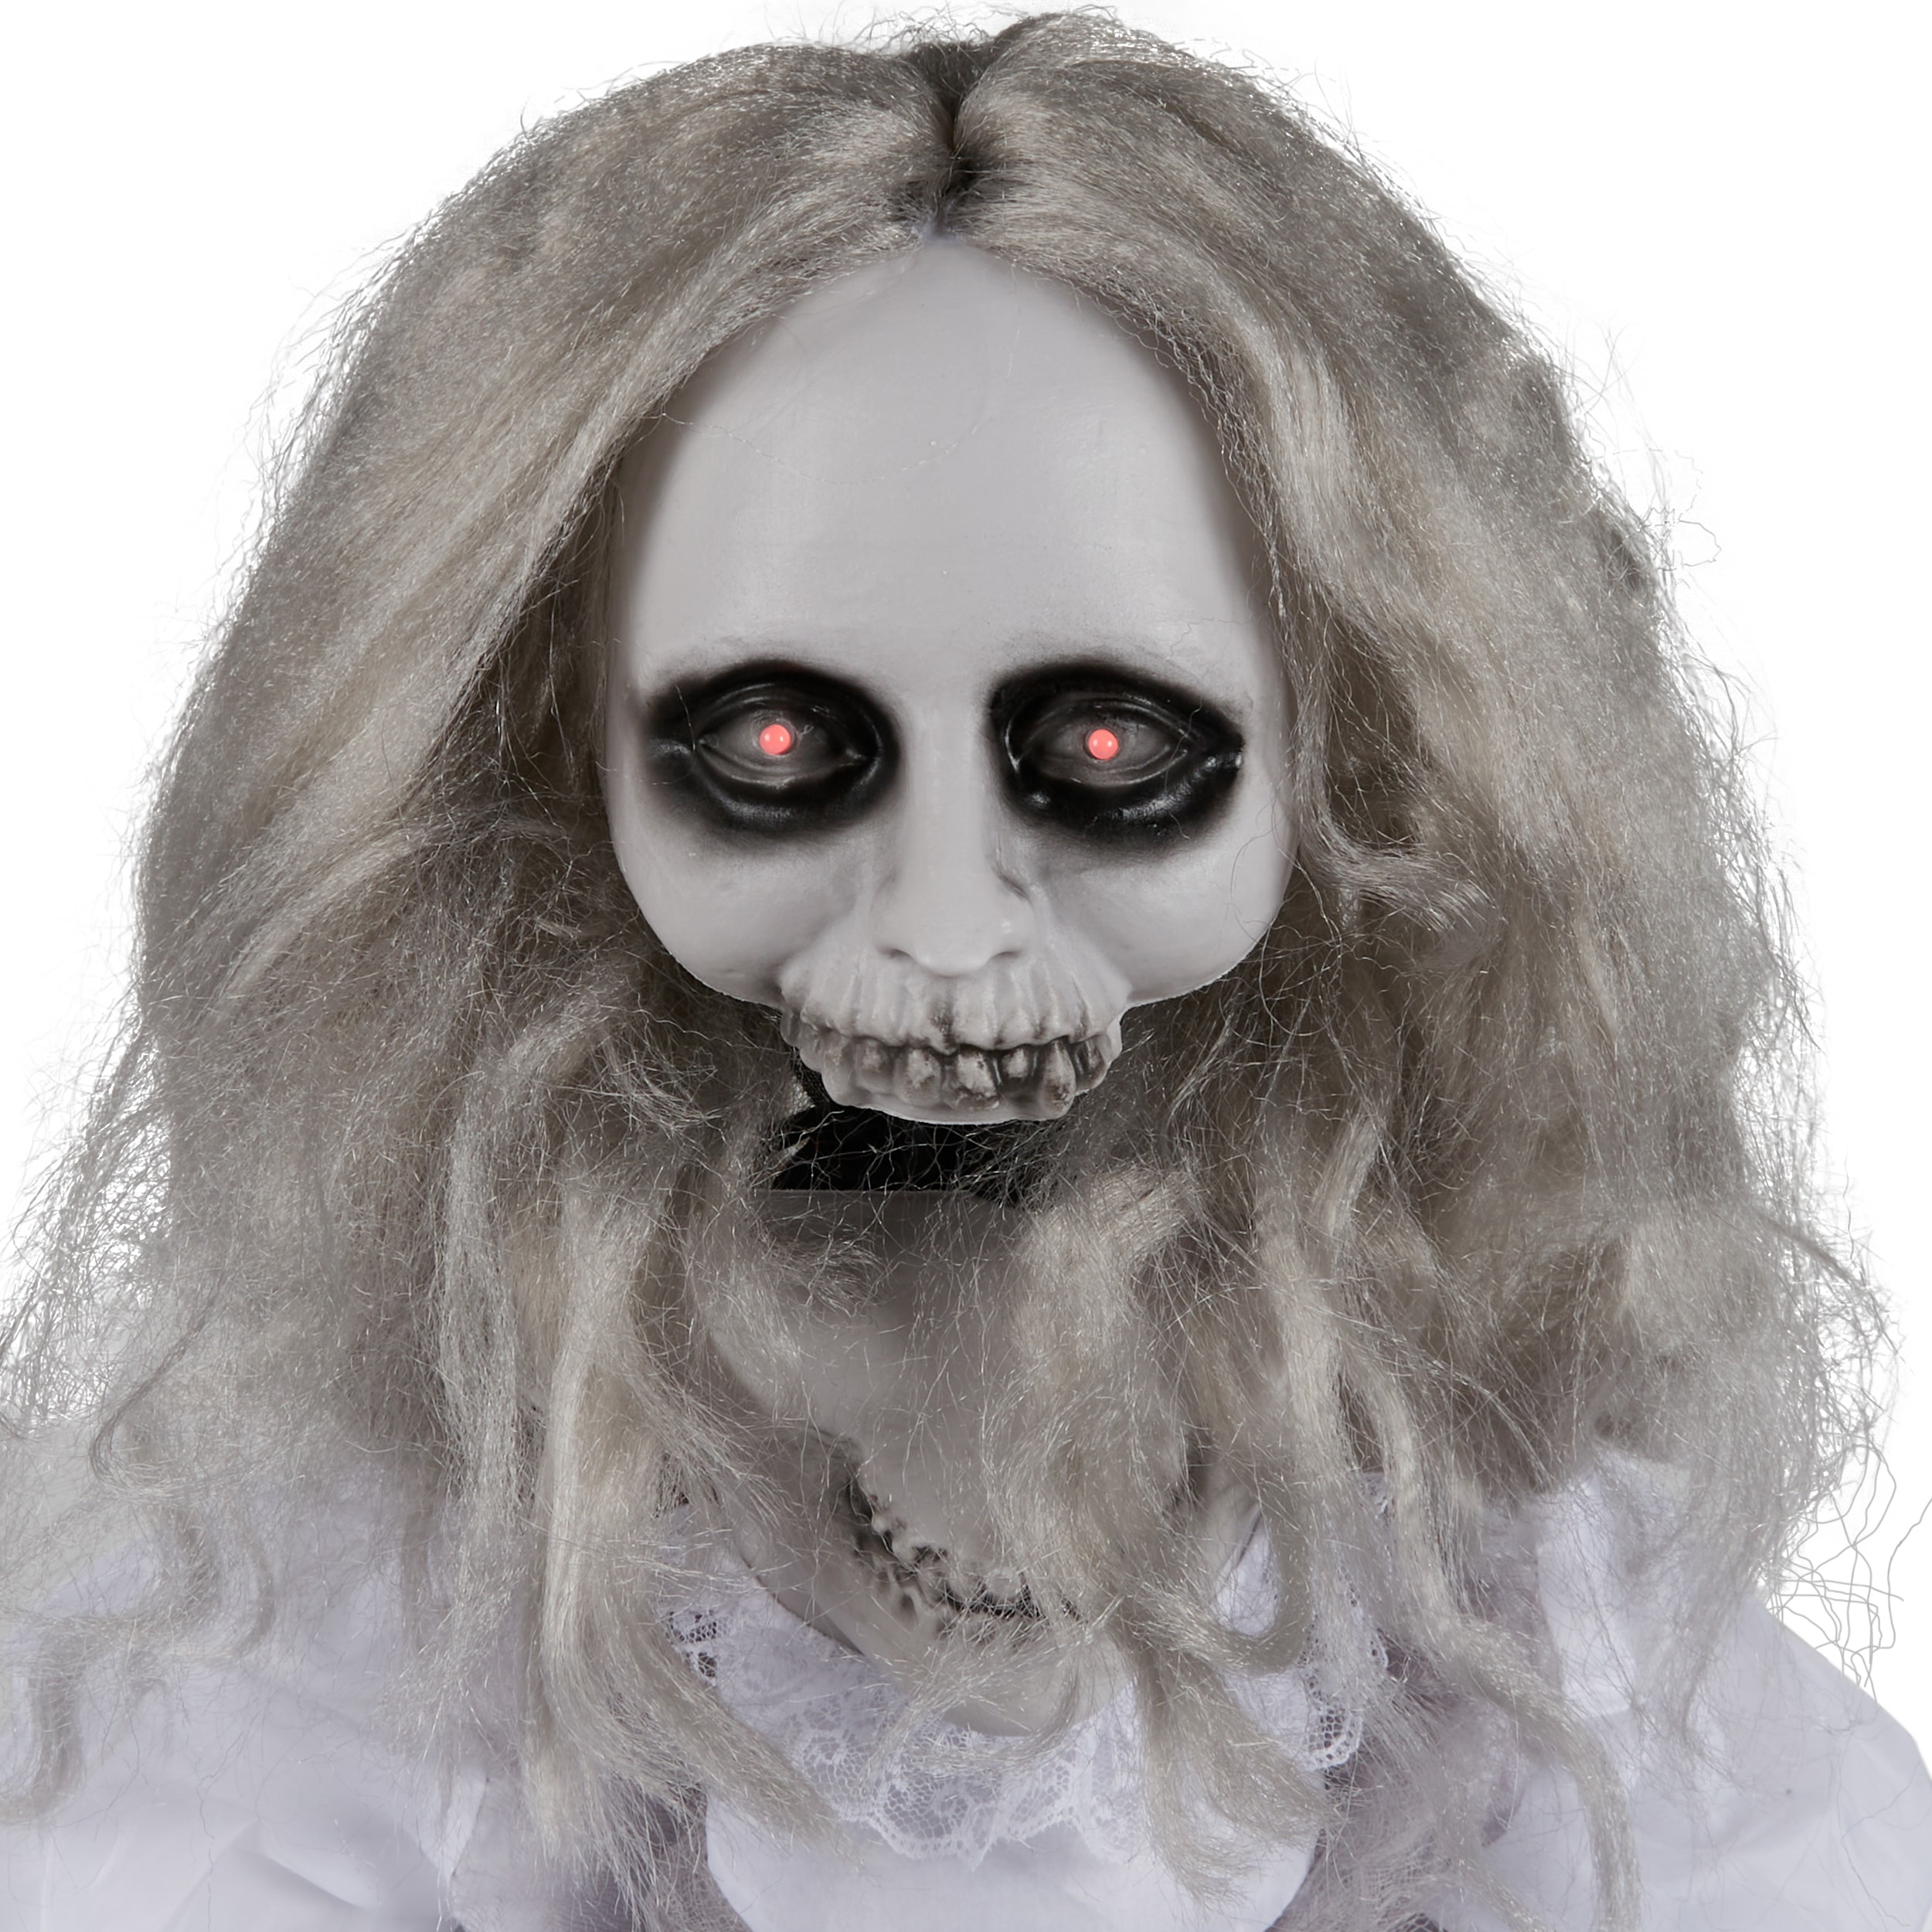 disney zombies 2 dolls uk Hot Sale - OFF 71%